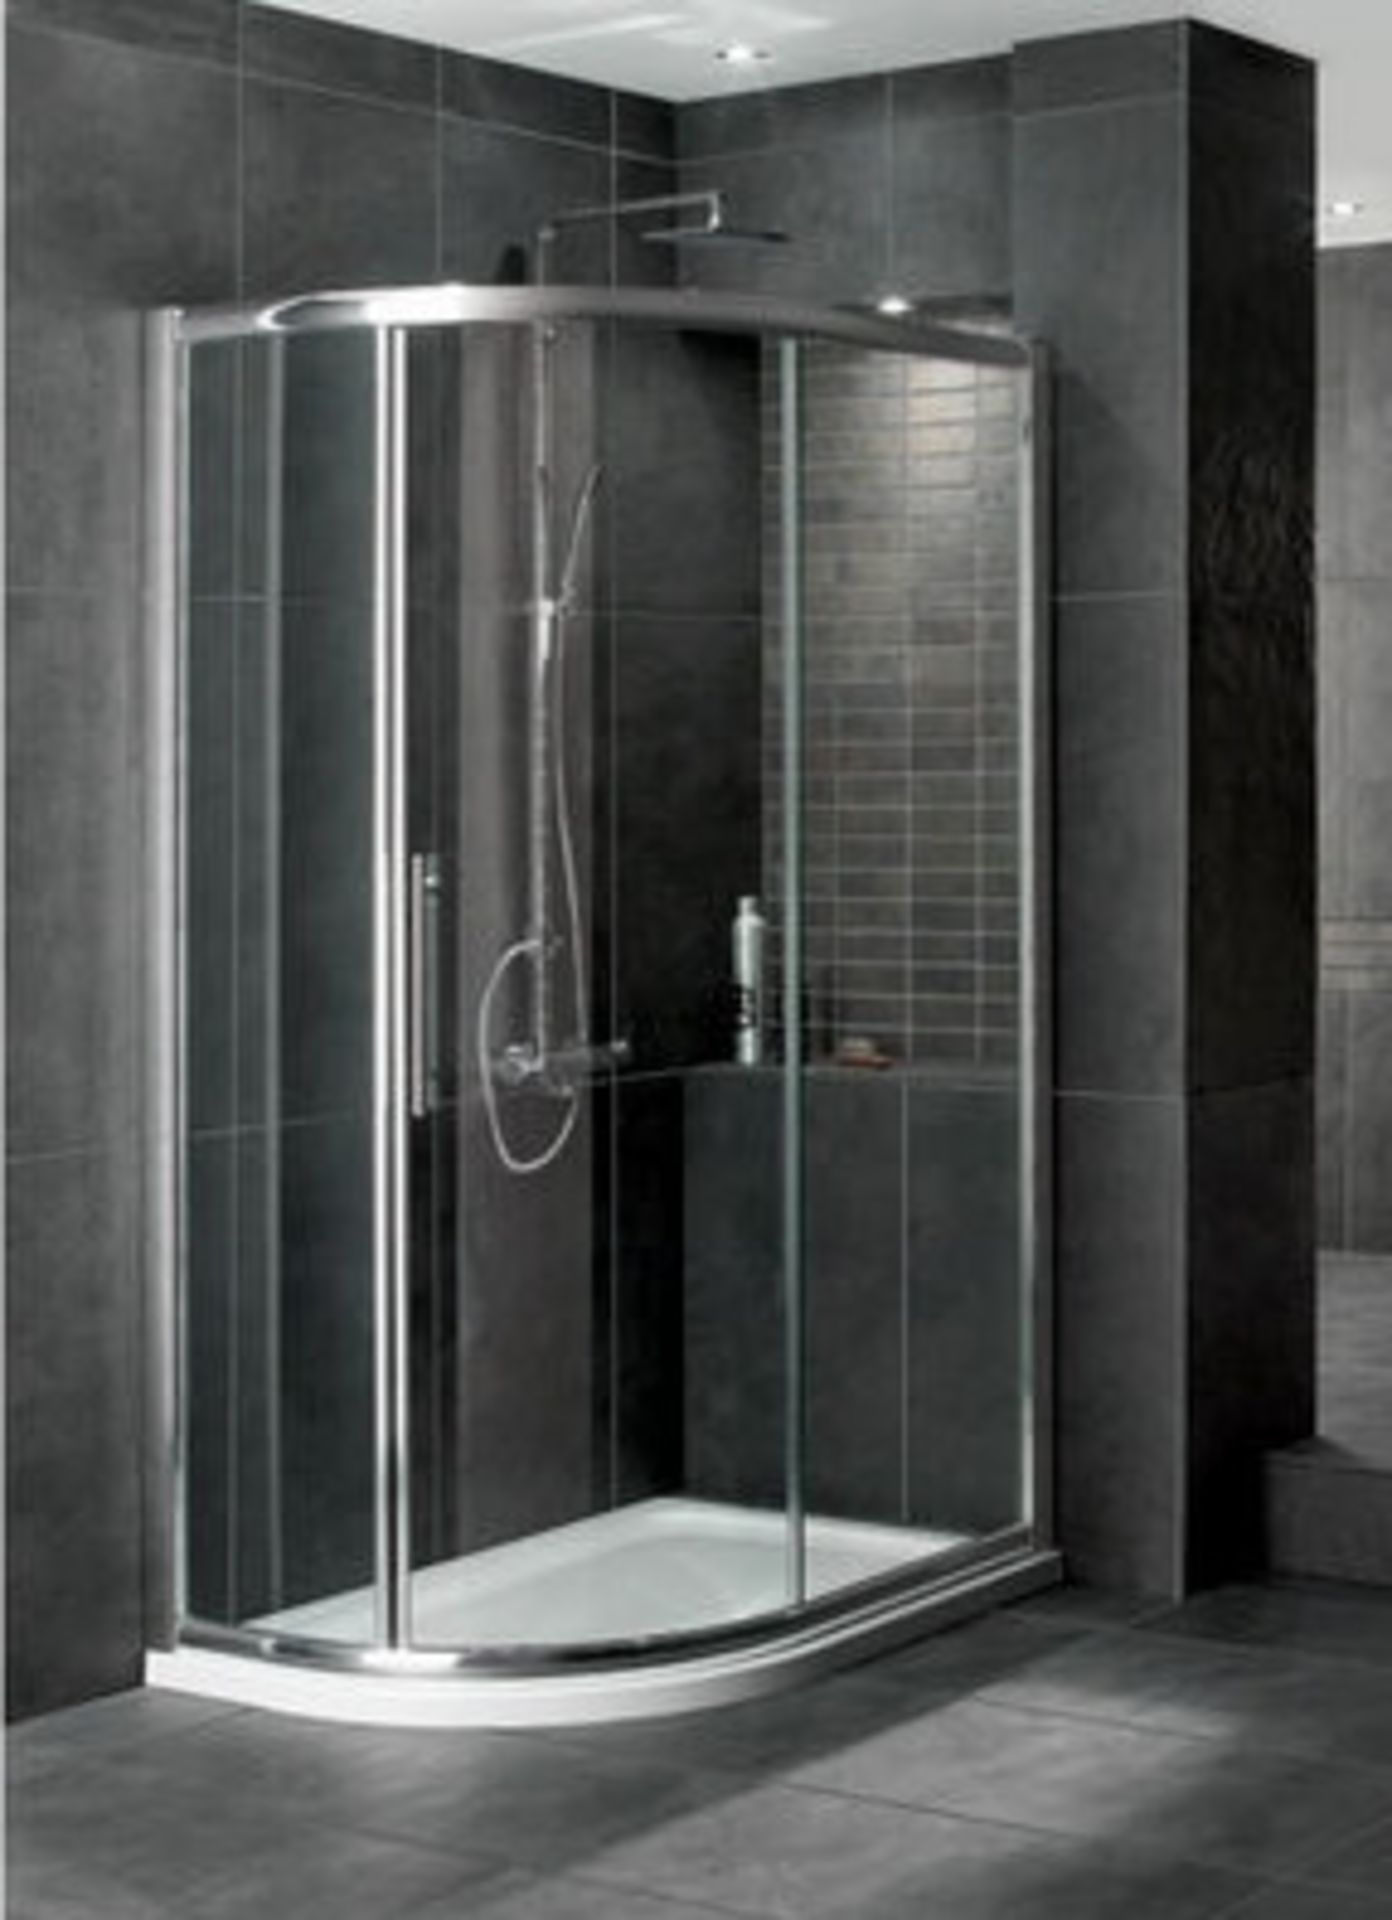 1 x Vogue SULIS Offset Quadrant 1100x900mm Shower Enclosure - Polished Chrome Finish - 6mm Clear